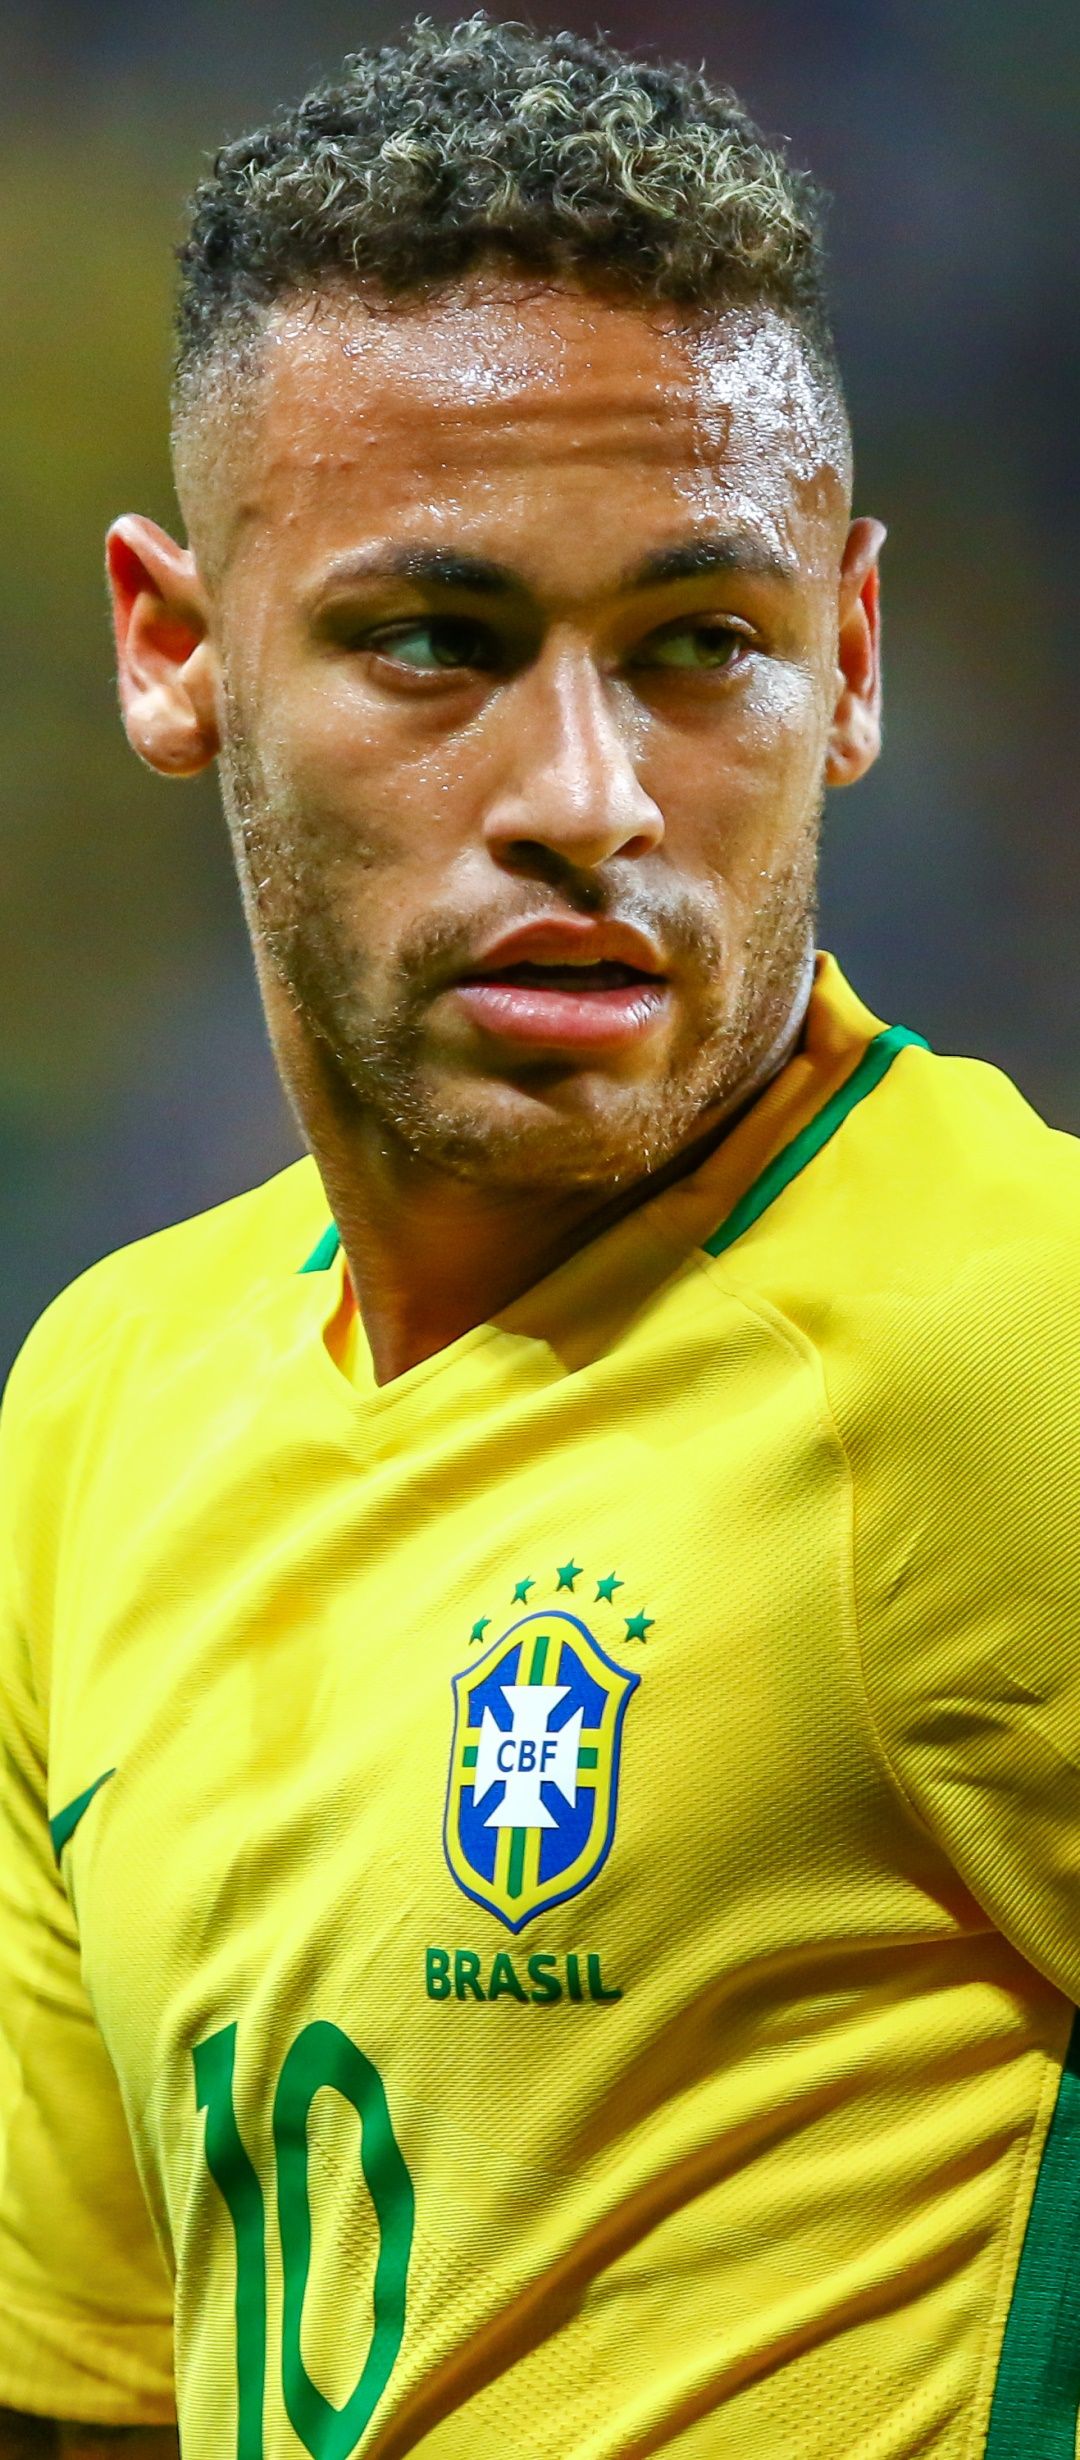 Neymar Brasil Wallpapers - Top Free Neymar Brasil Backgrounds ...